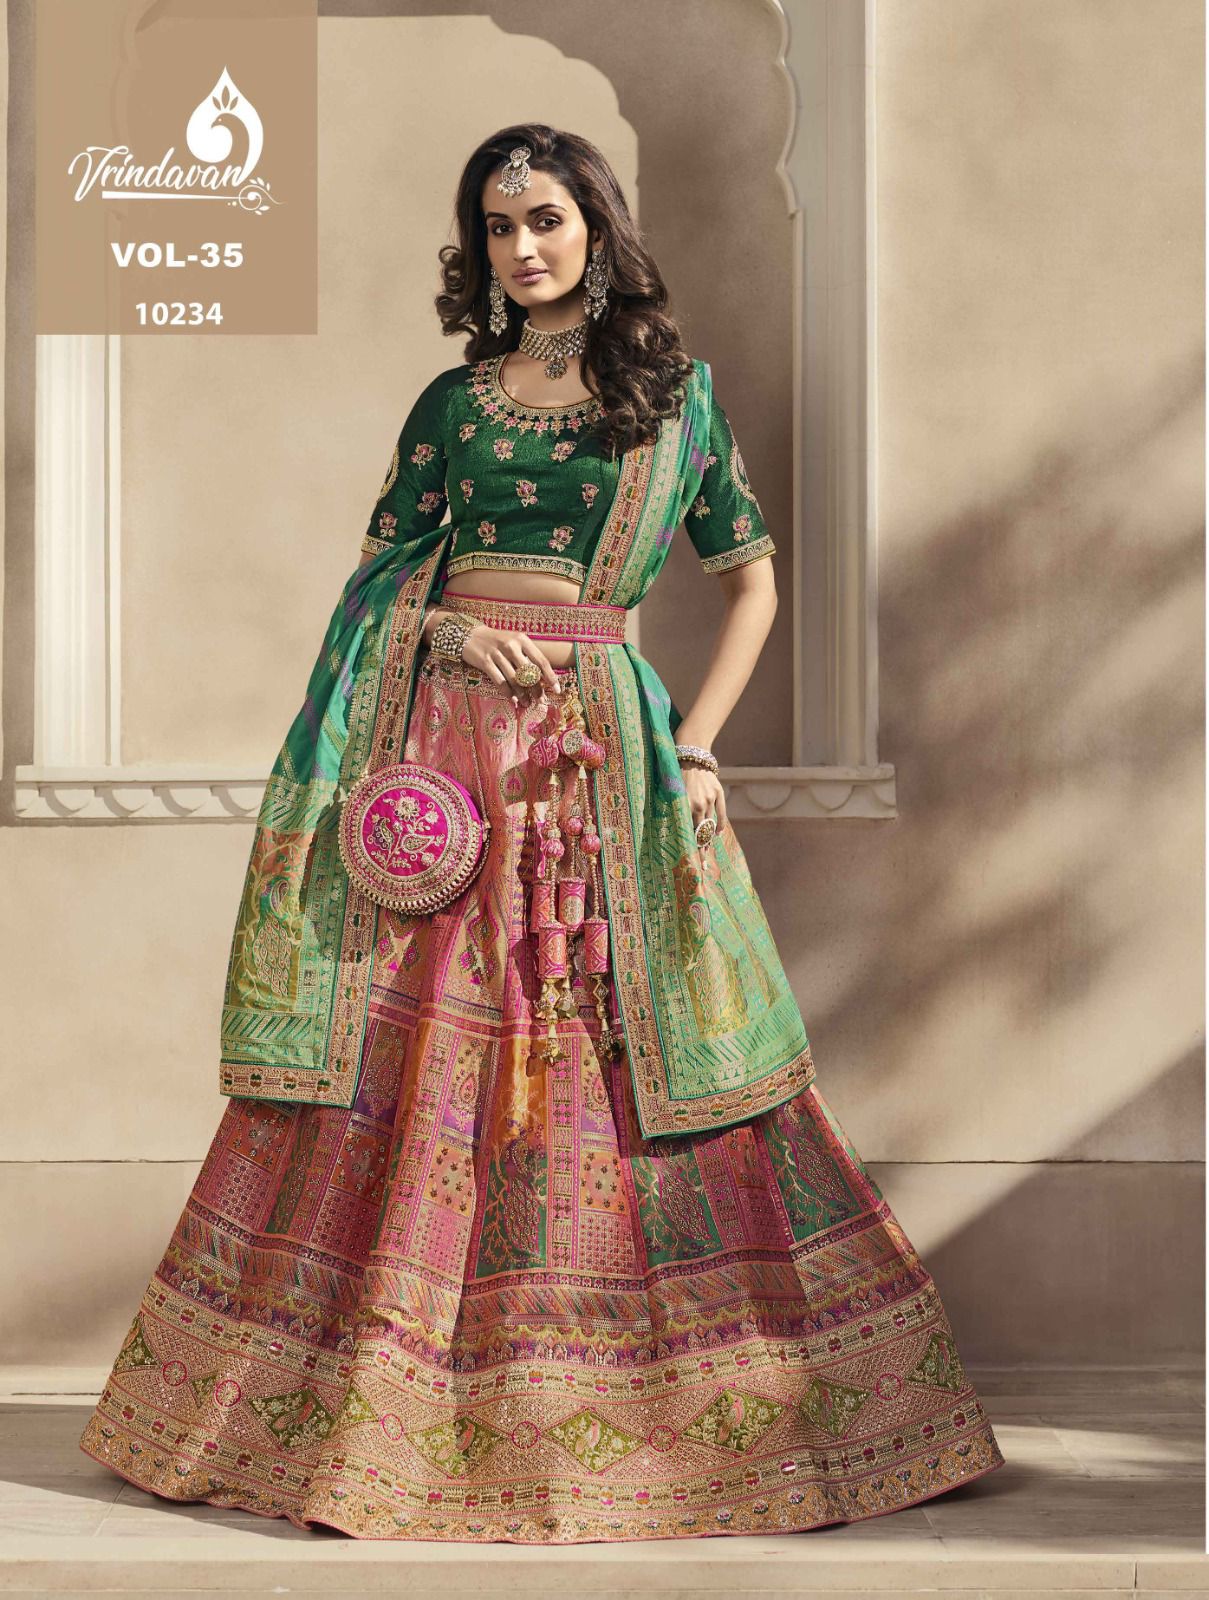 Royal Vrindavan Banarasi Silk Lehenga Vol 35 Dno.10234 Anant Tex Exports Private Limited